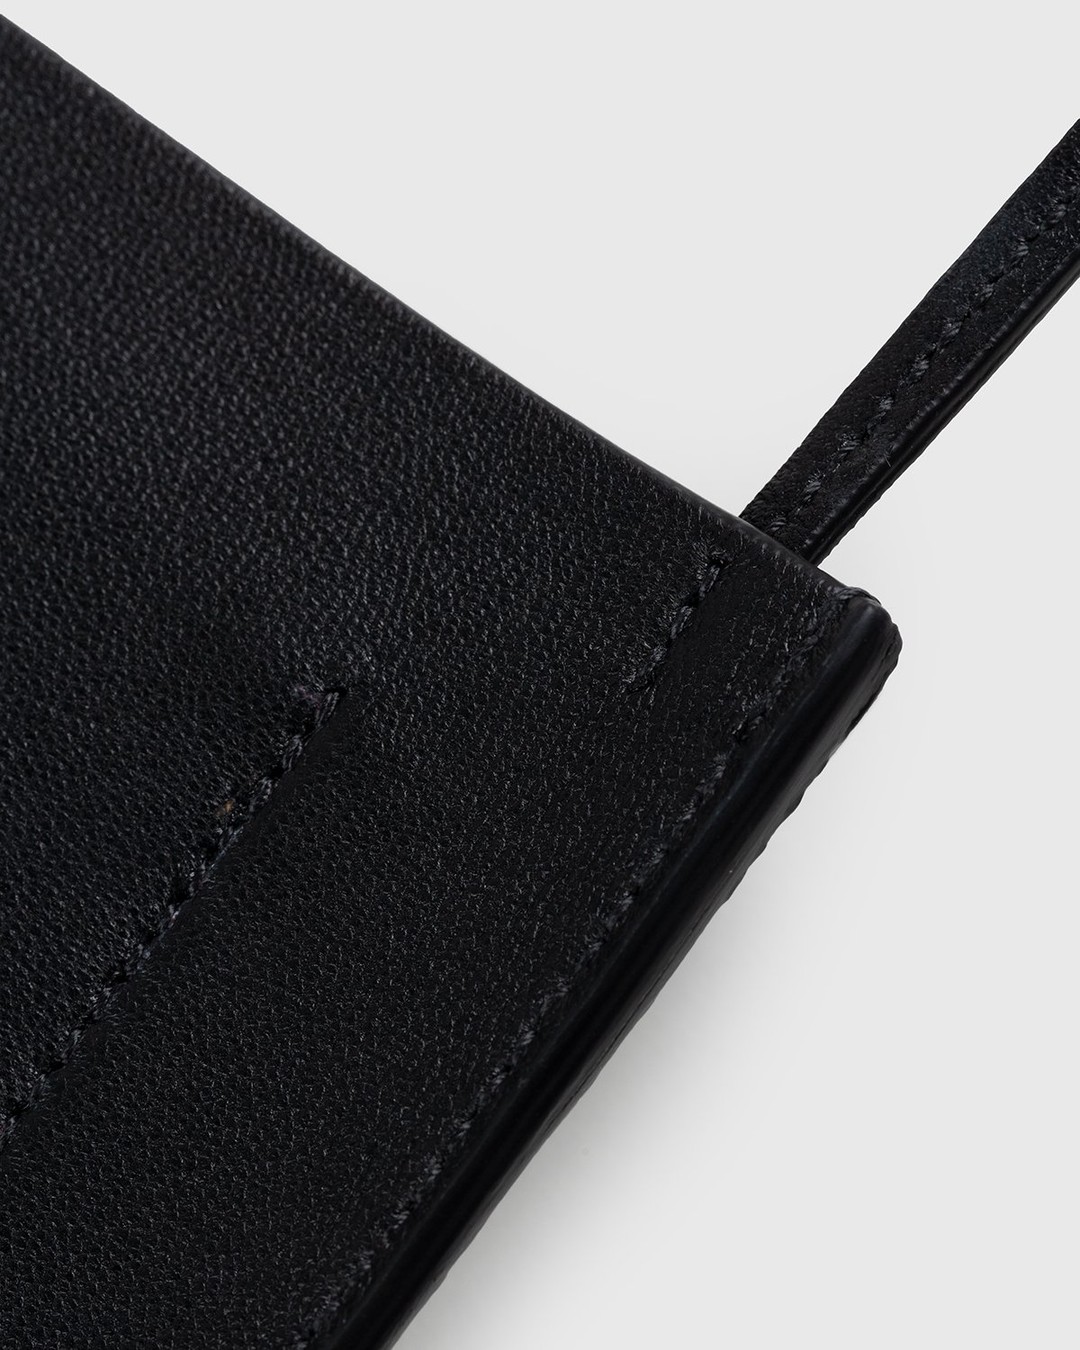 Jil Sander – Leather Phone Holder Pouch Black - Phone cases - Black - Image 4